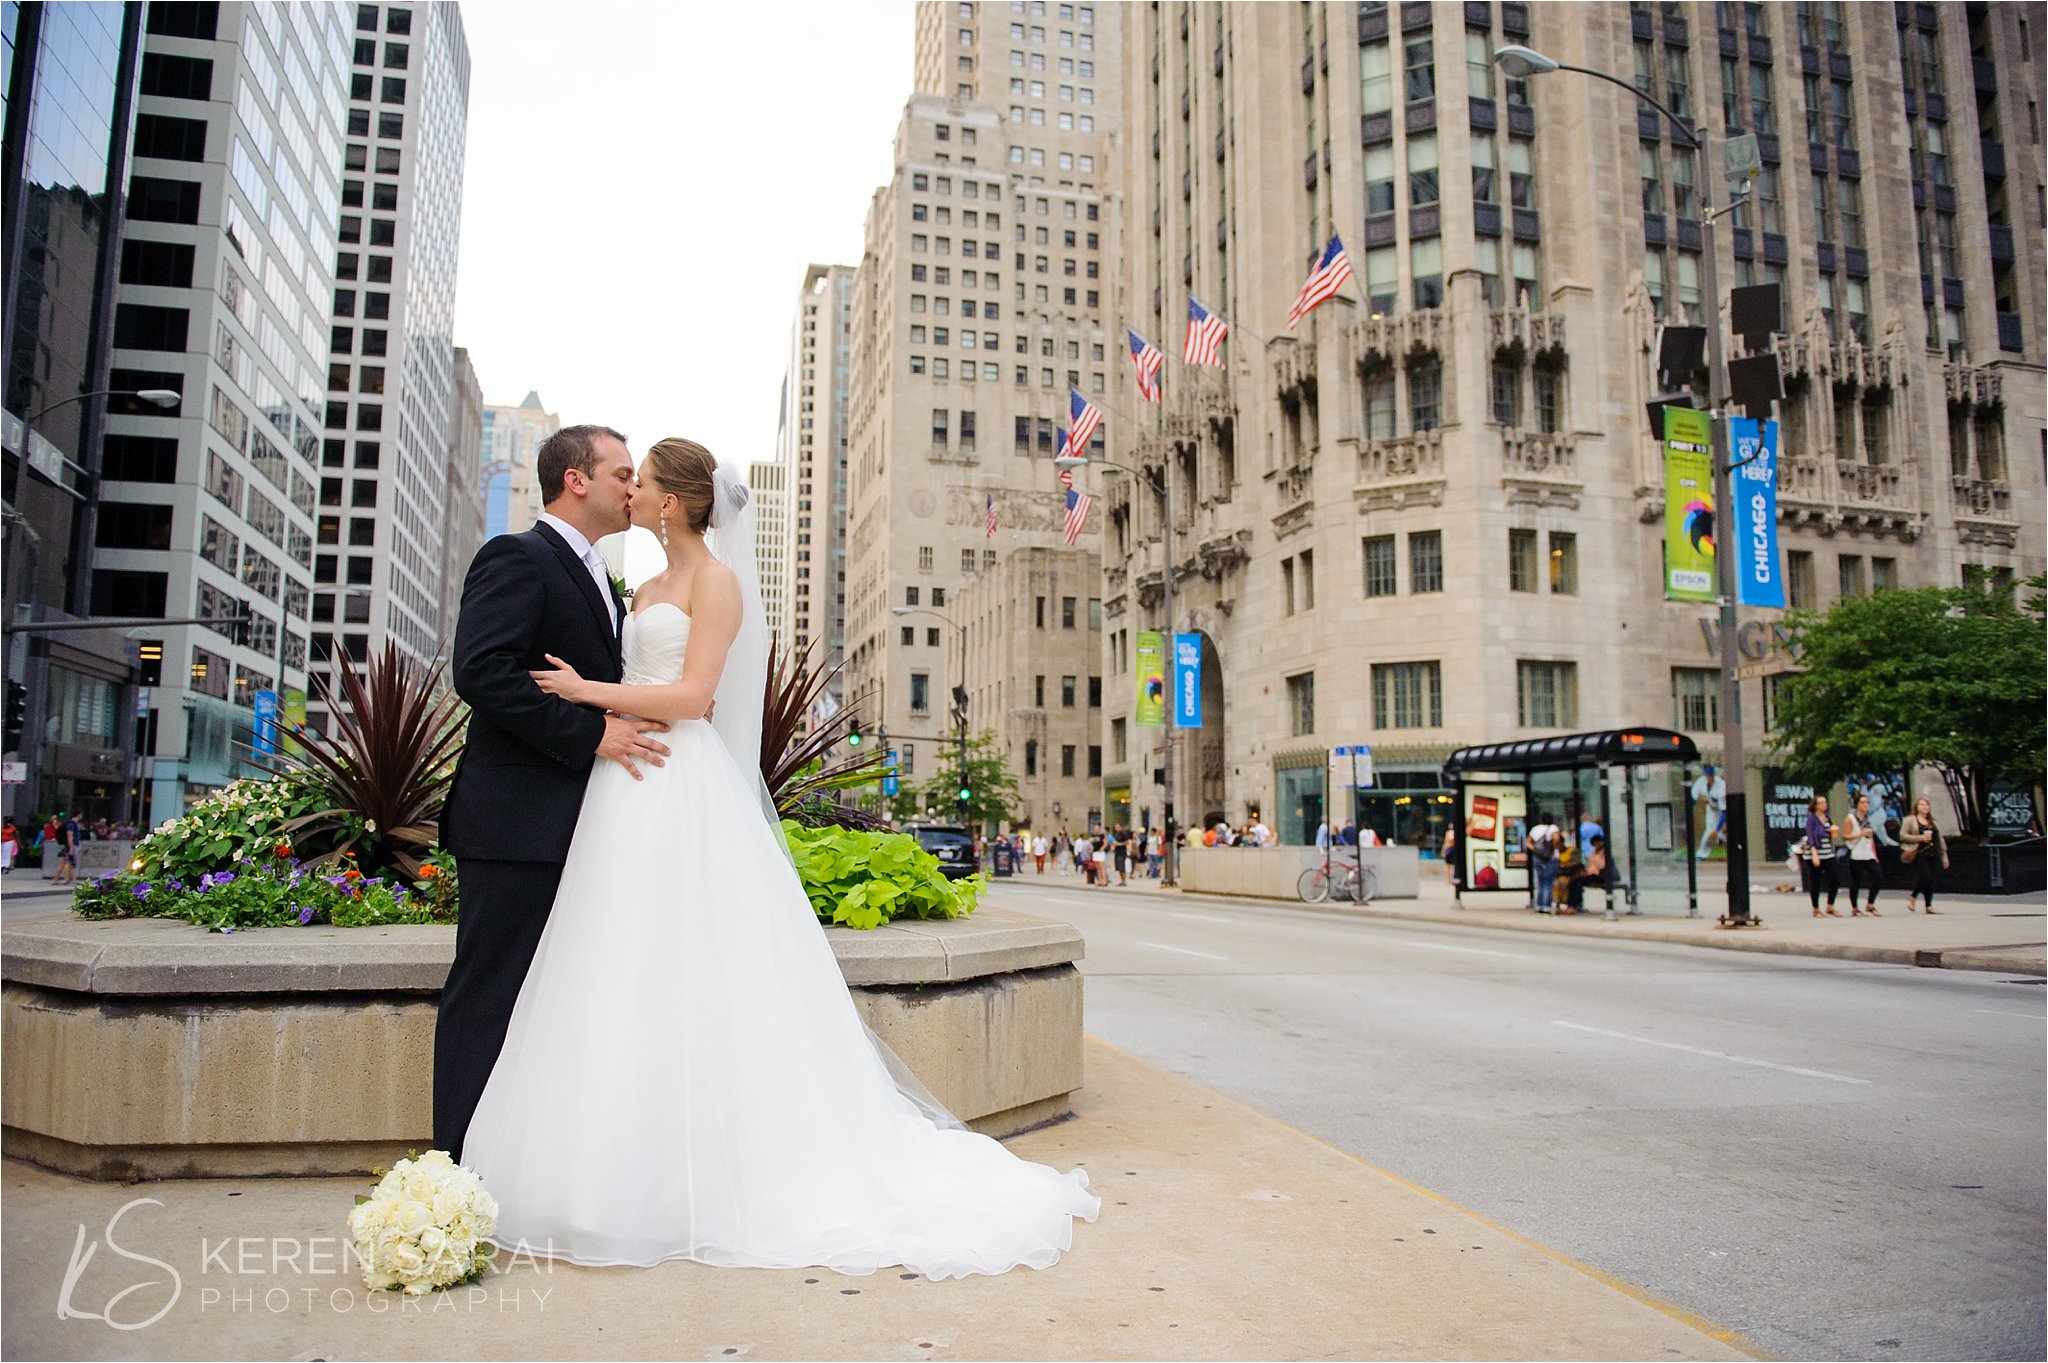 Michigan Avenue_Chicago Wedding Photography_0094.jpg